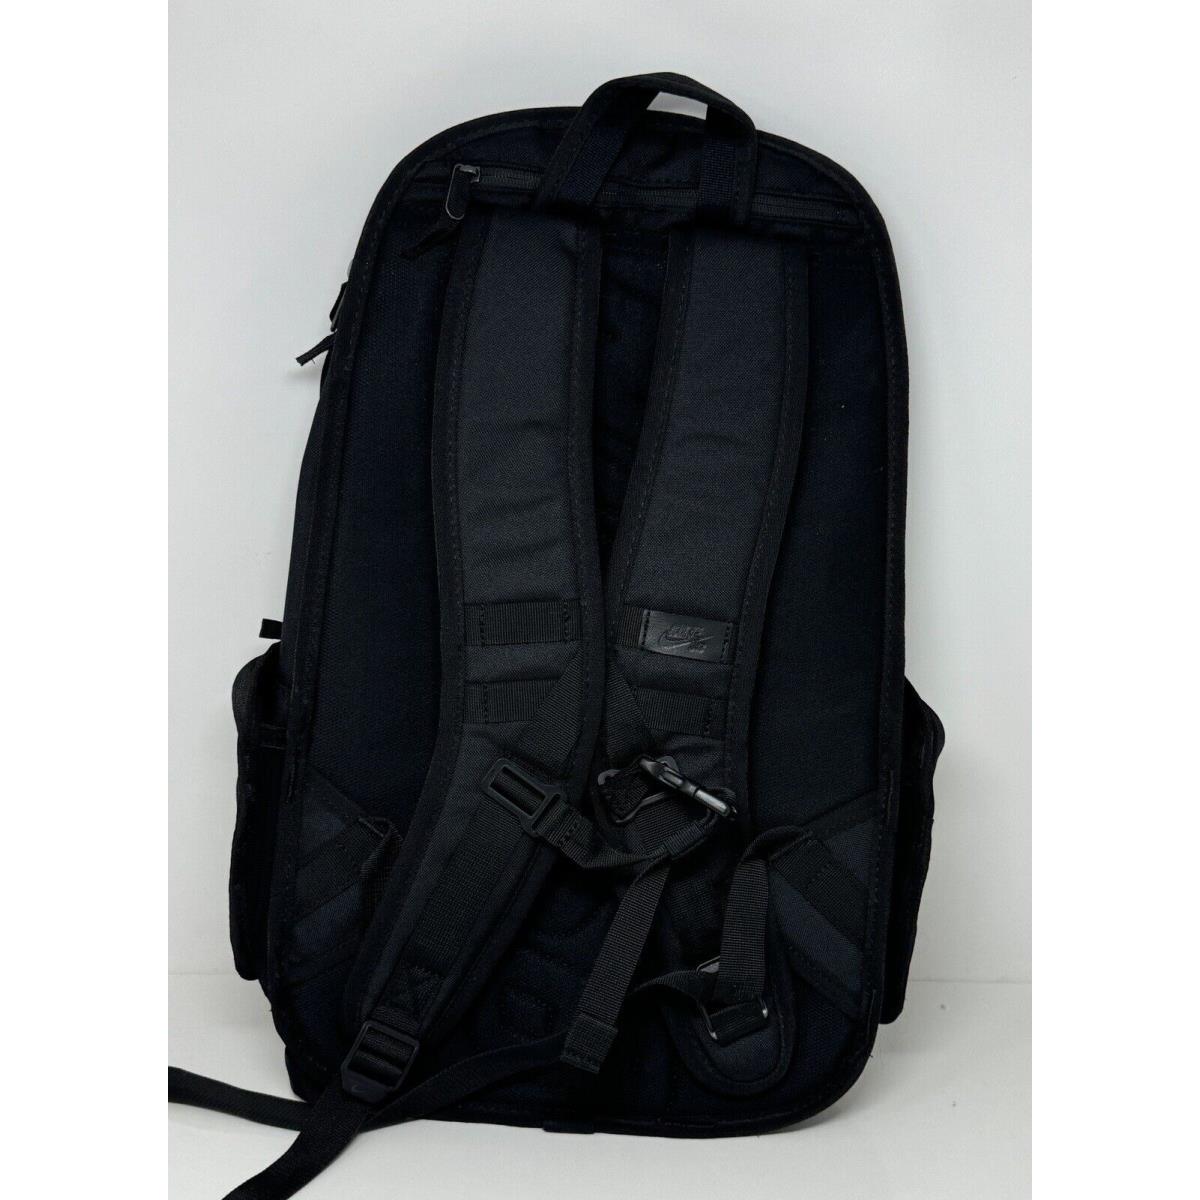 Nike SB Rpm Backpack Black Size 26L Bag Gym Training School BA5403-010